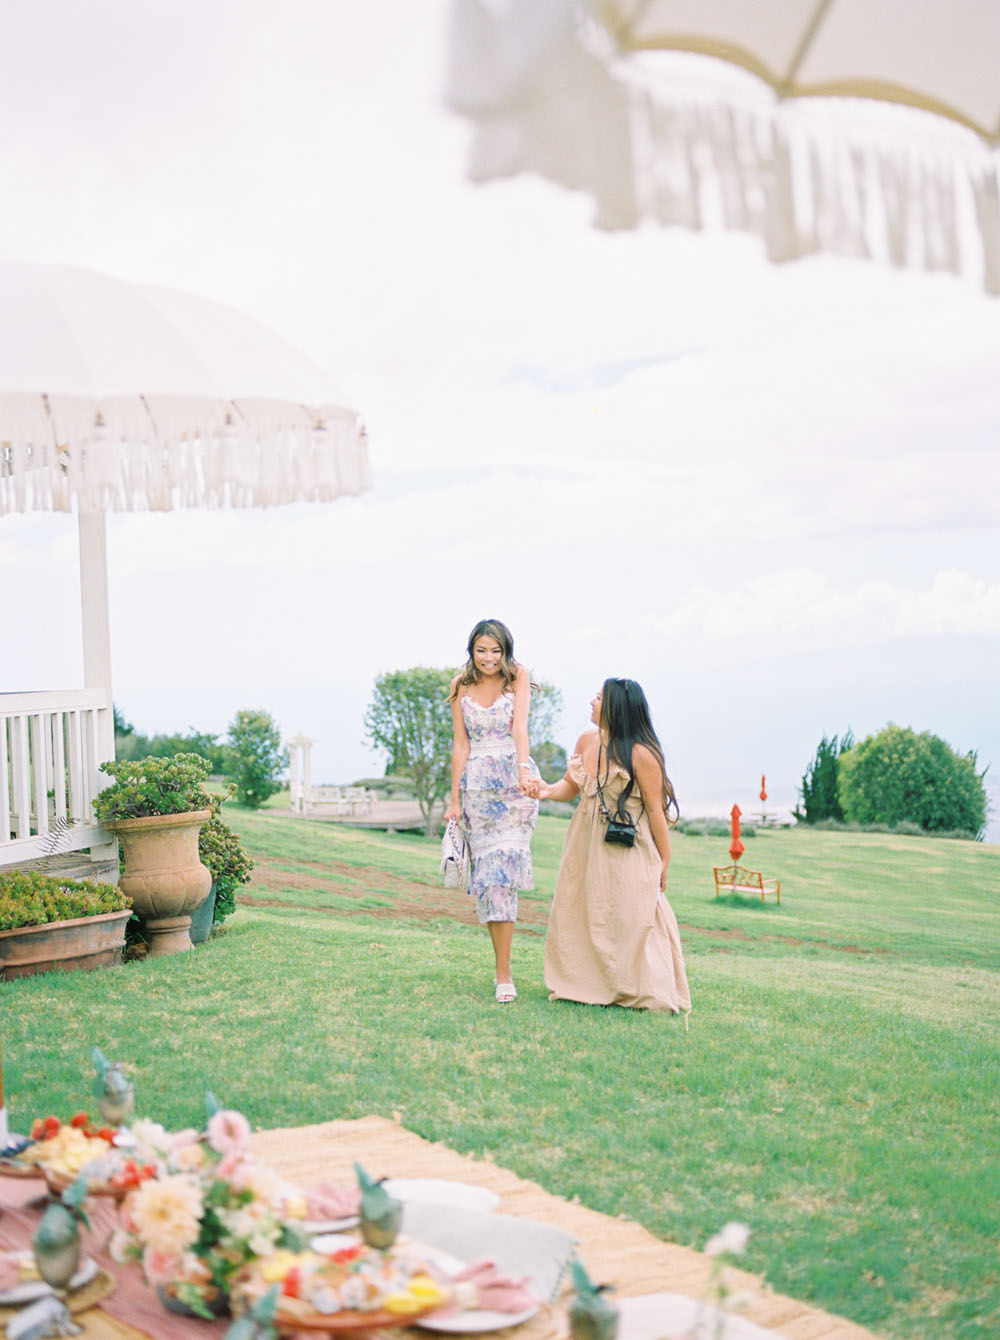 A lavender inspired bridal brunch picnic at Maui flower fields